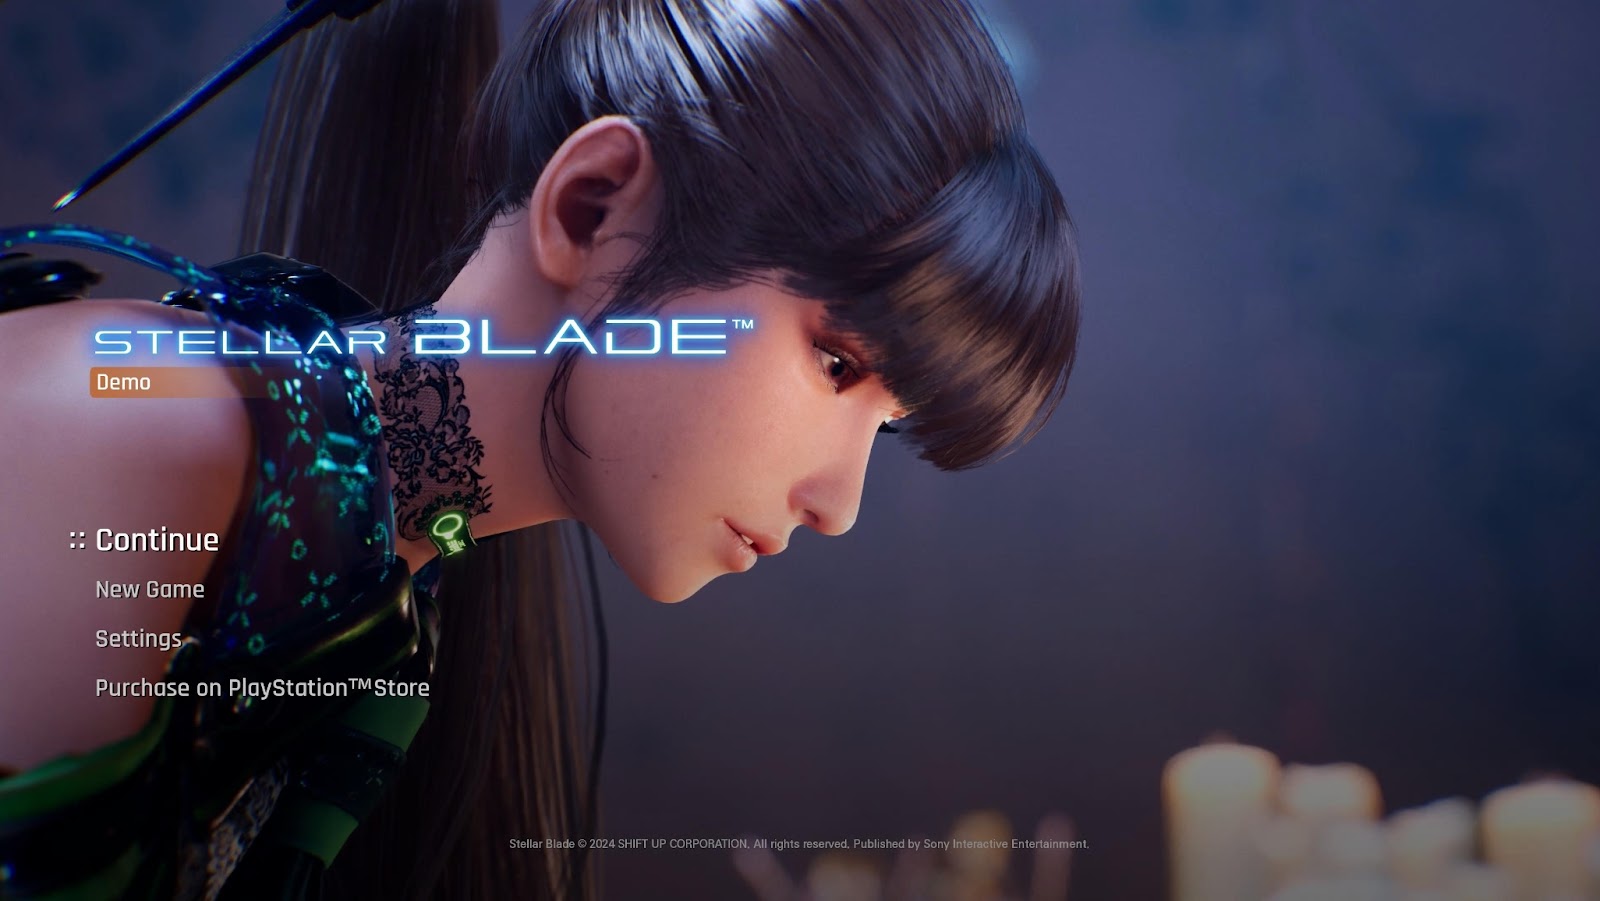 HOT IGN said Stellar Blades Eve is a bland